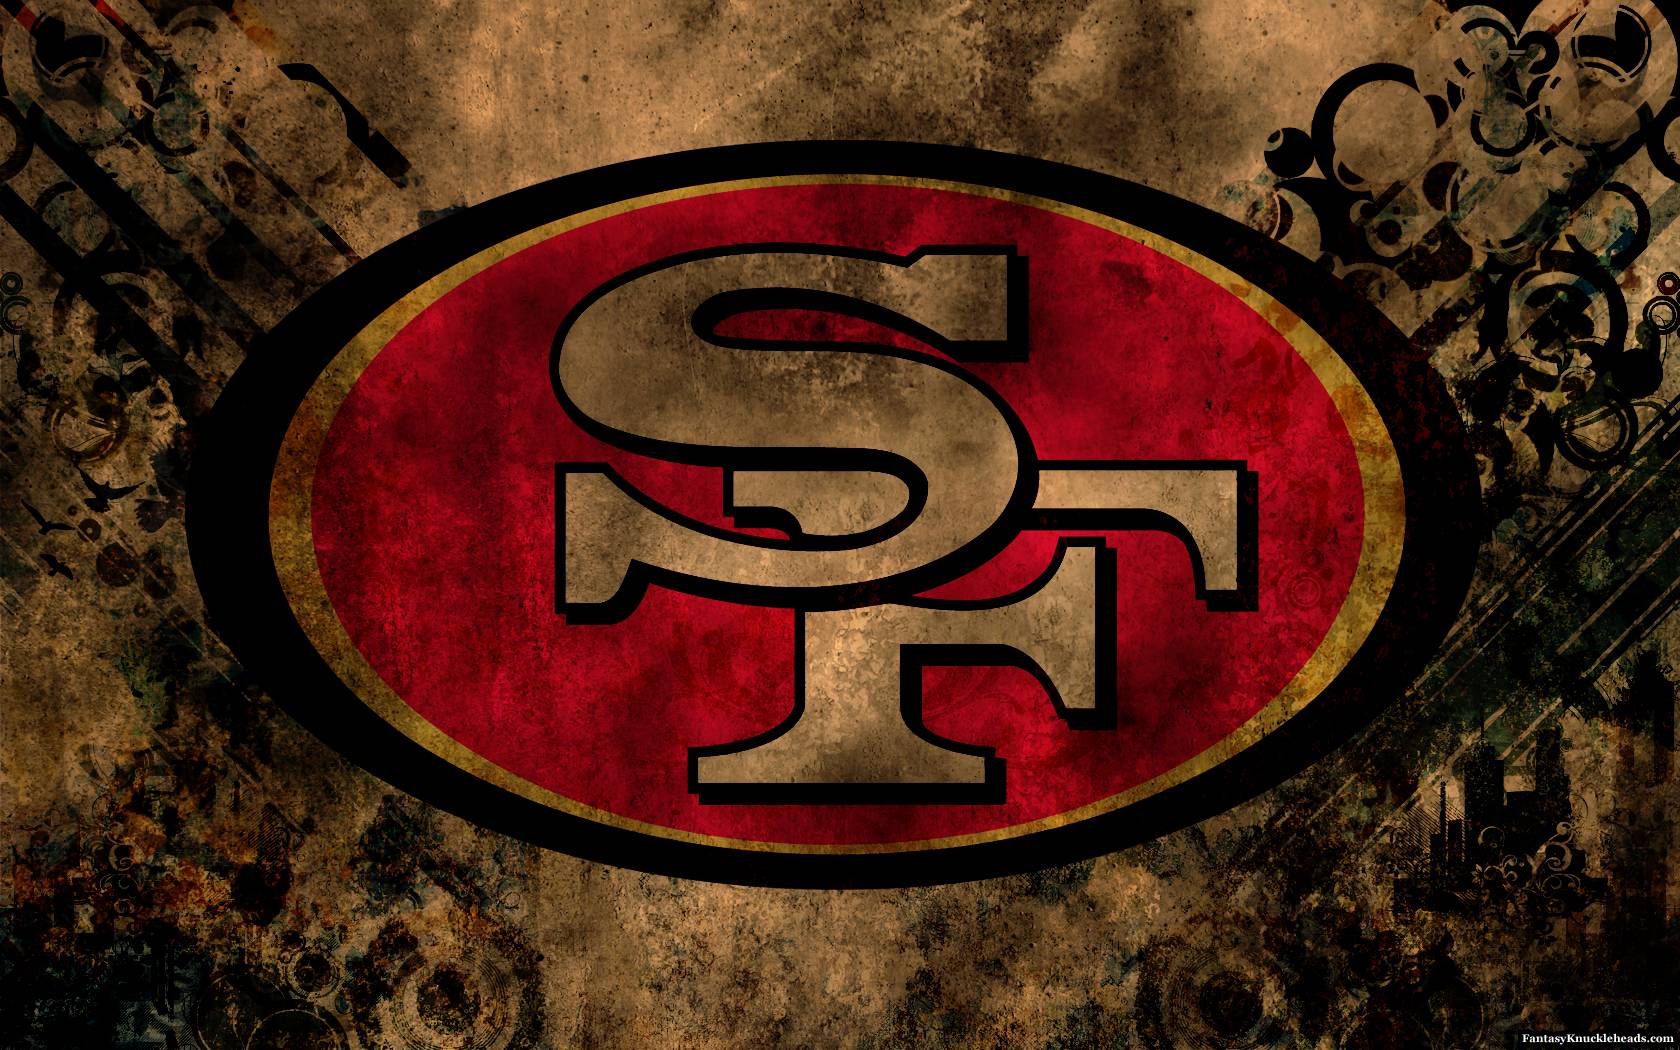 San Francisco 49ers wallpaper HD image. San Francisco 49ers